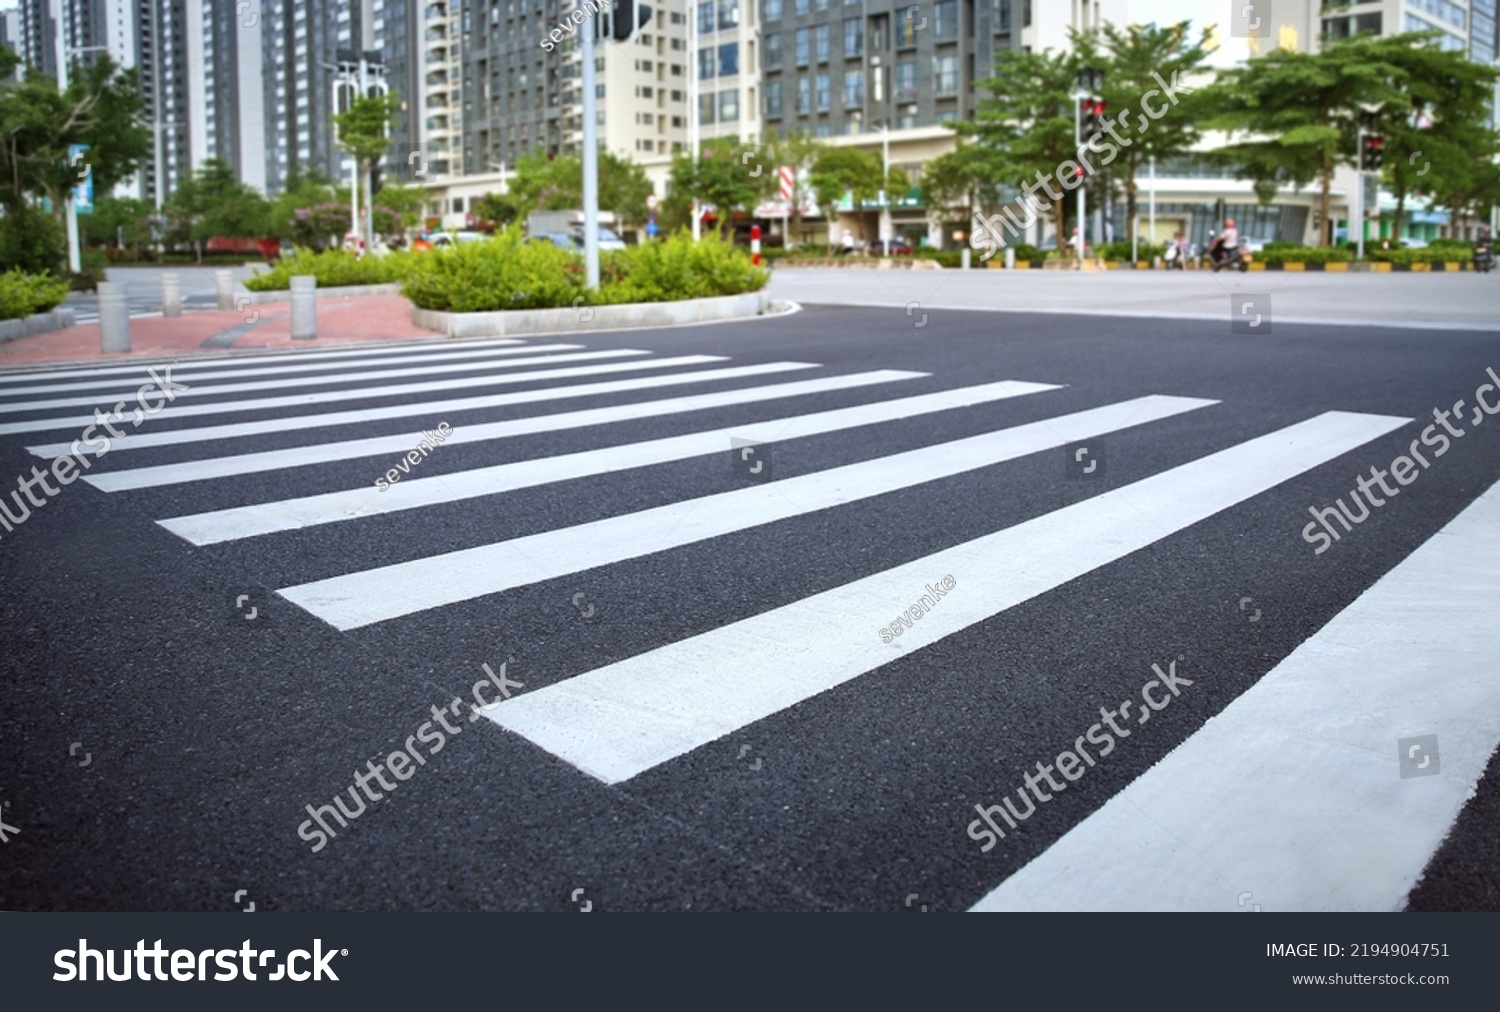 pedestrian crossing, white stripes on black asphalt, road markings zebra crossing, place to cross the road, traffic rules #2194904751